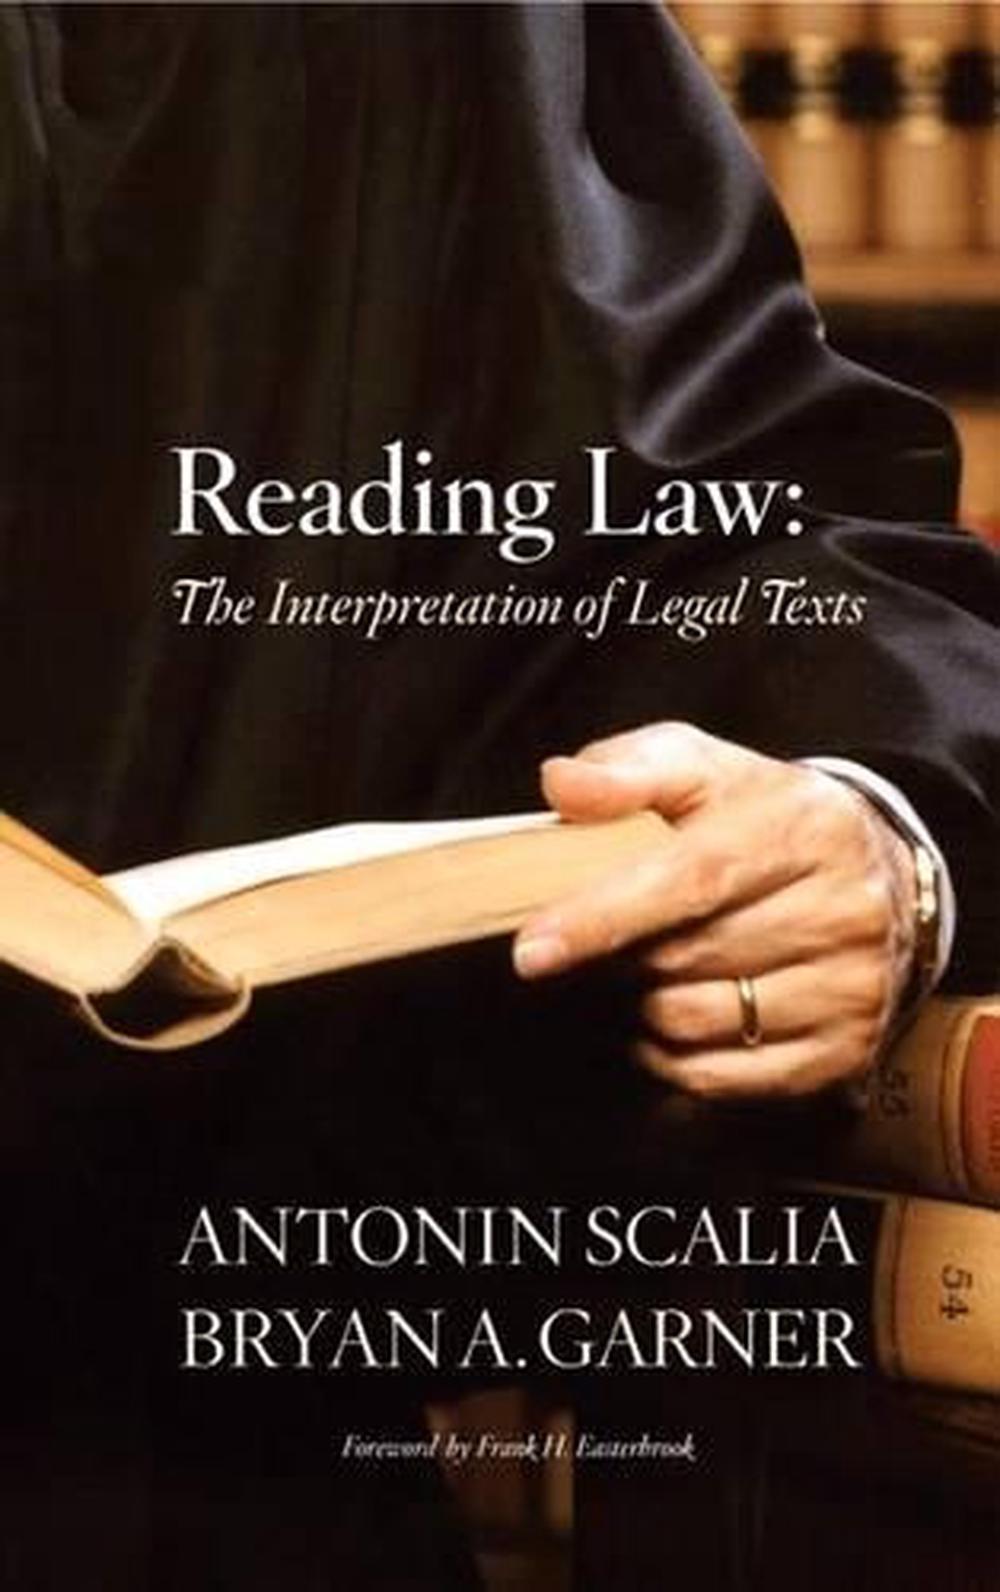 Reading Law The Interpretation of Legal Texts by Antonin Scalia, Hardcover, 9780314275554 Buy